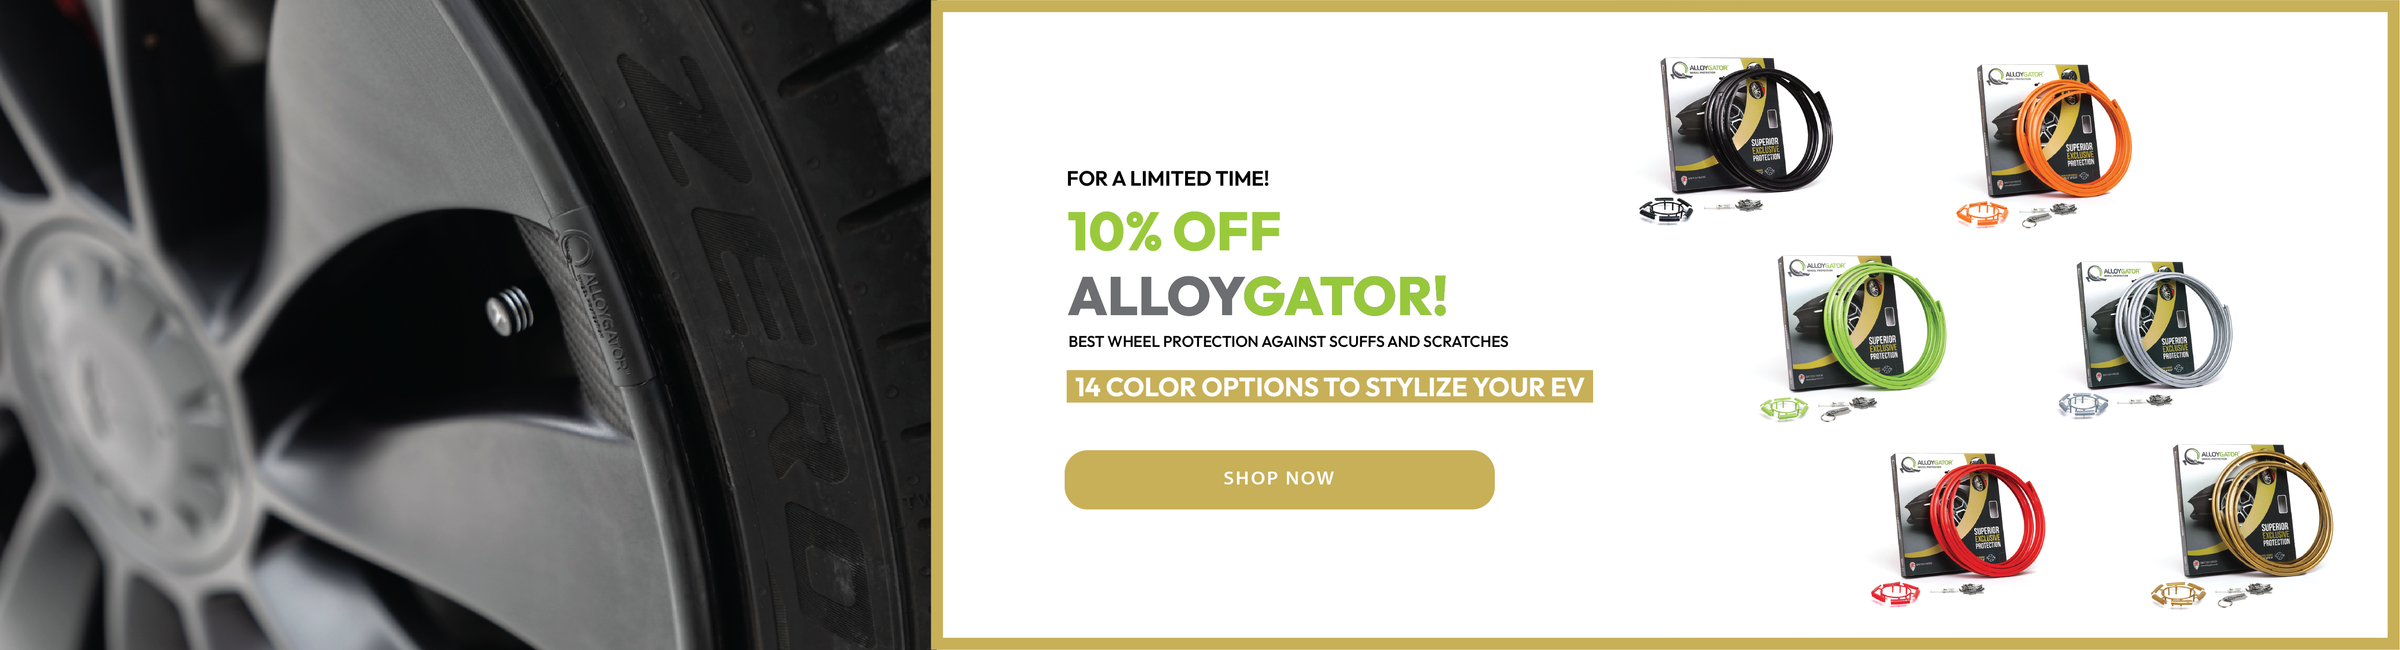 10% OFF AlloyGator